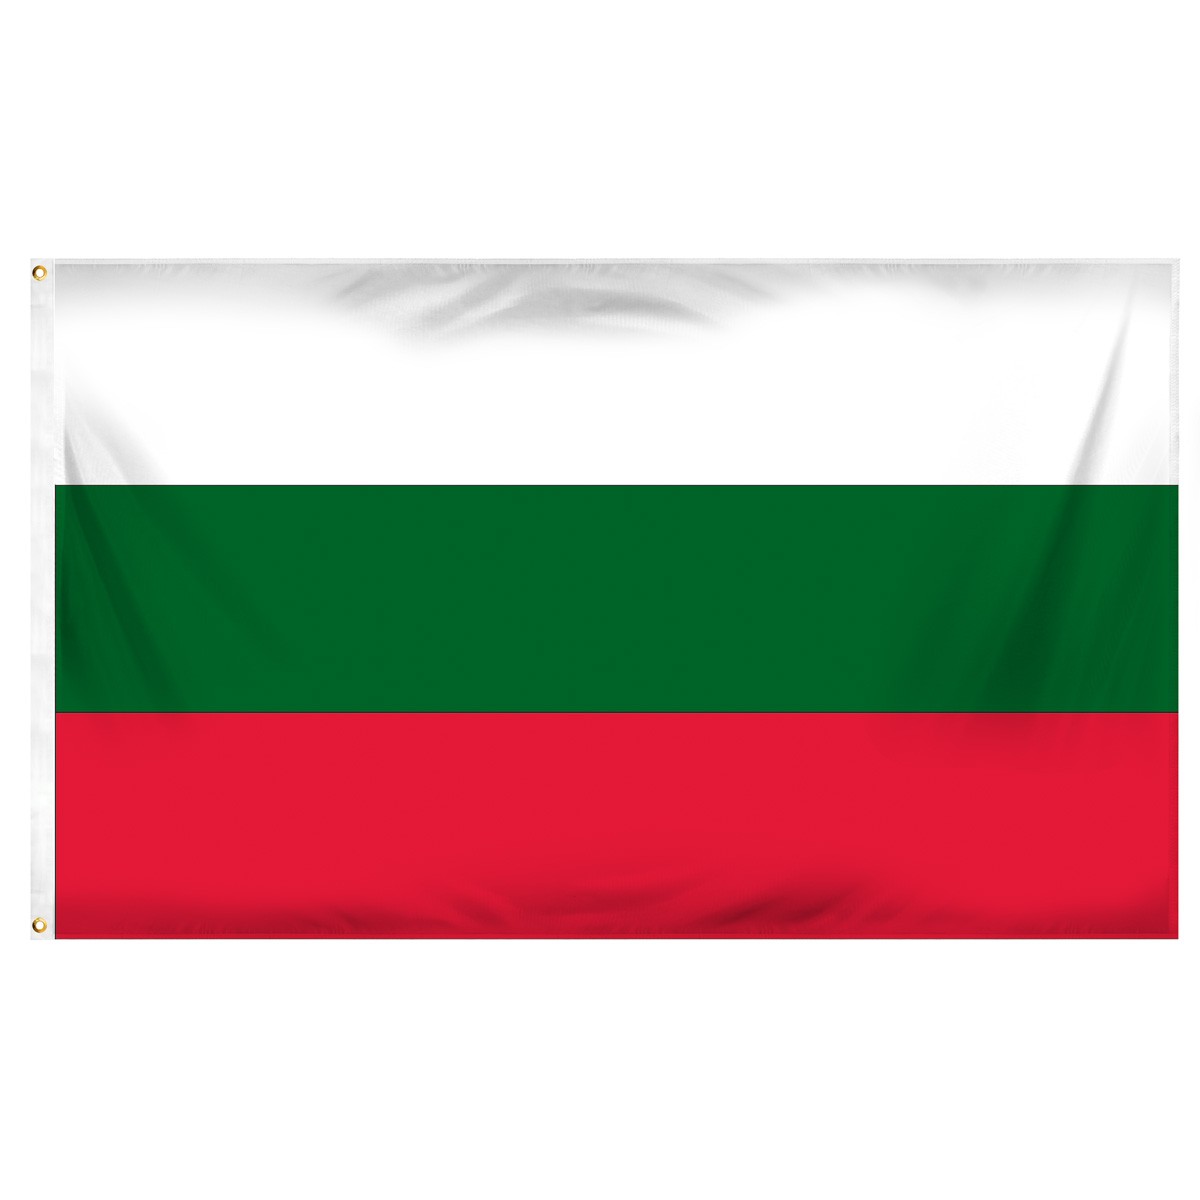 Bulgaria Beach Flag and Sailing Flag